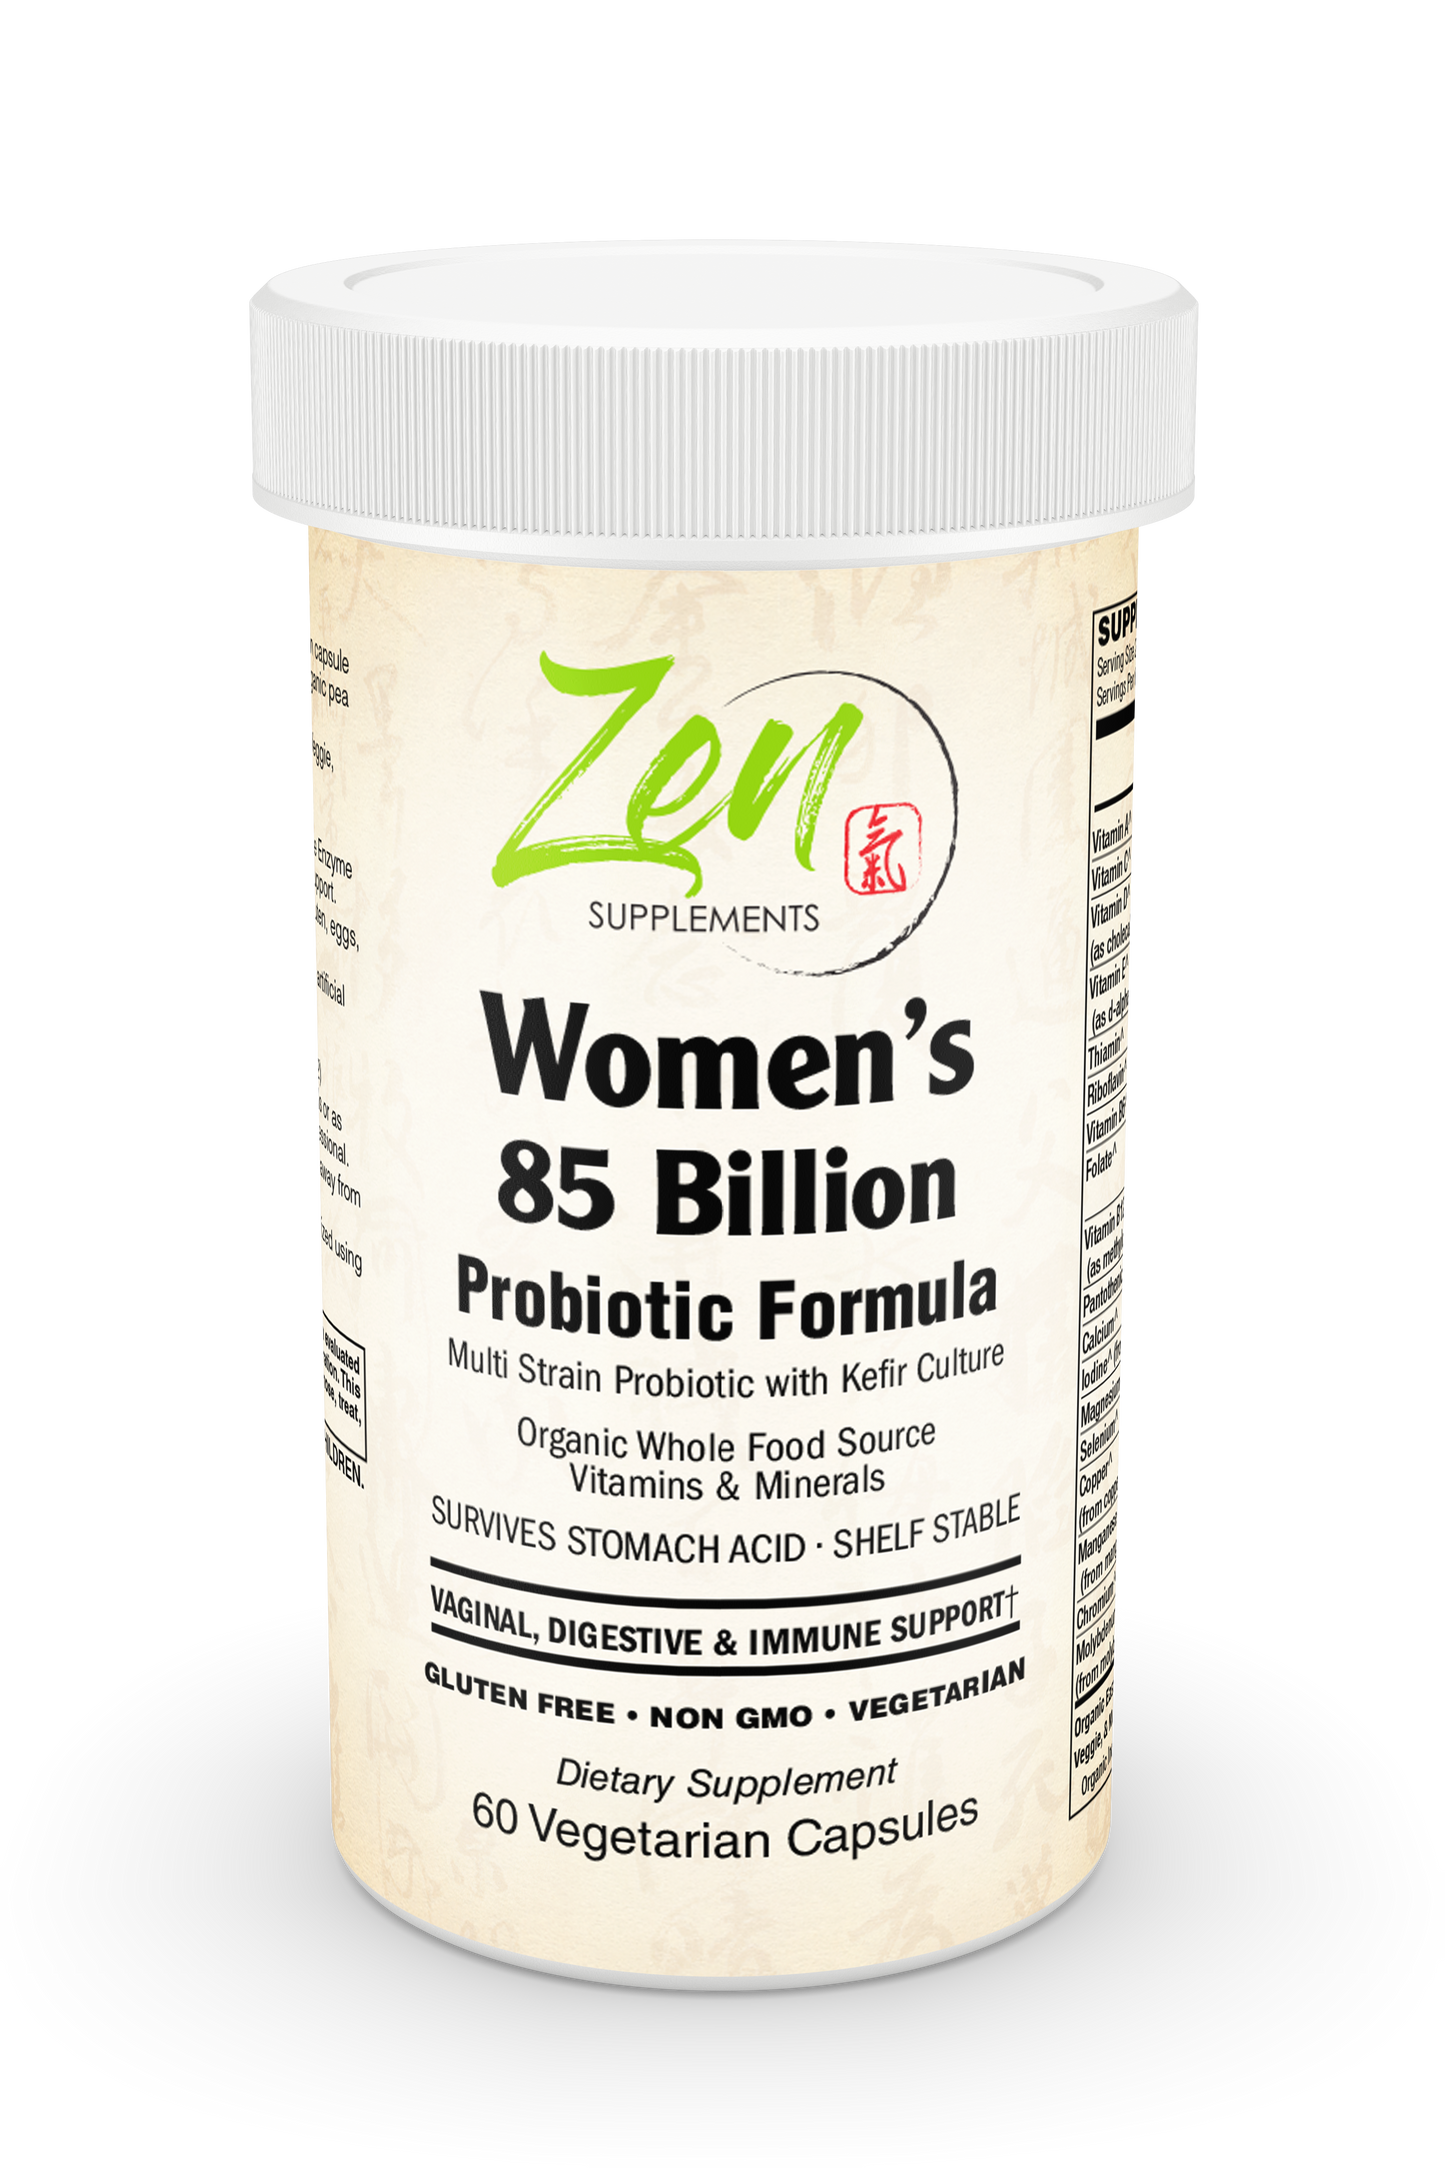 Women’s 85 Billion CFU Probiotic Formula 60 VCAP